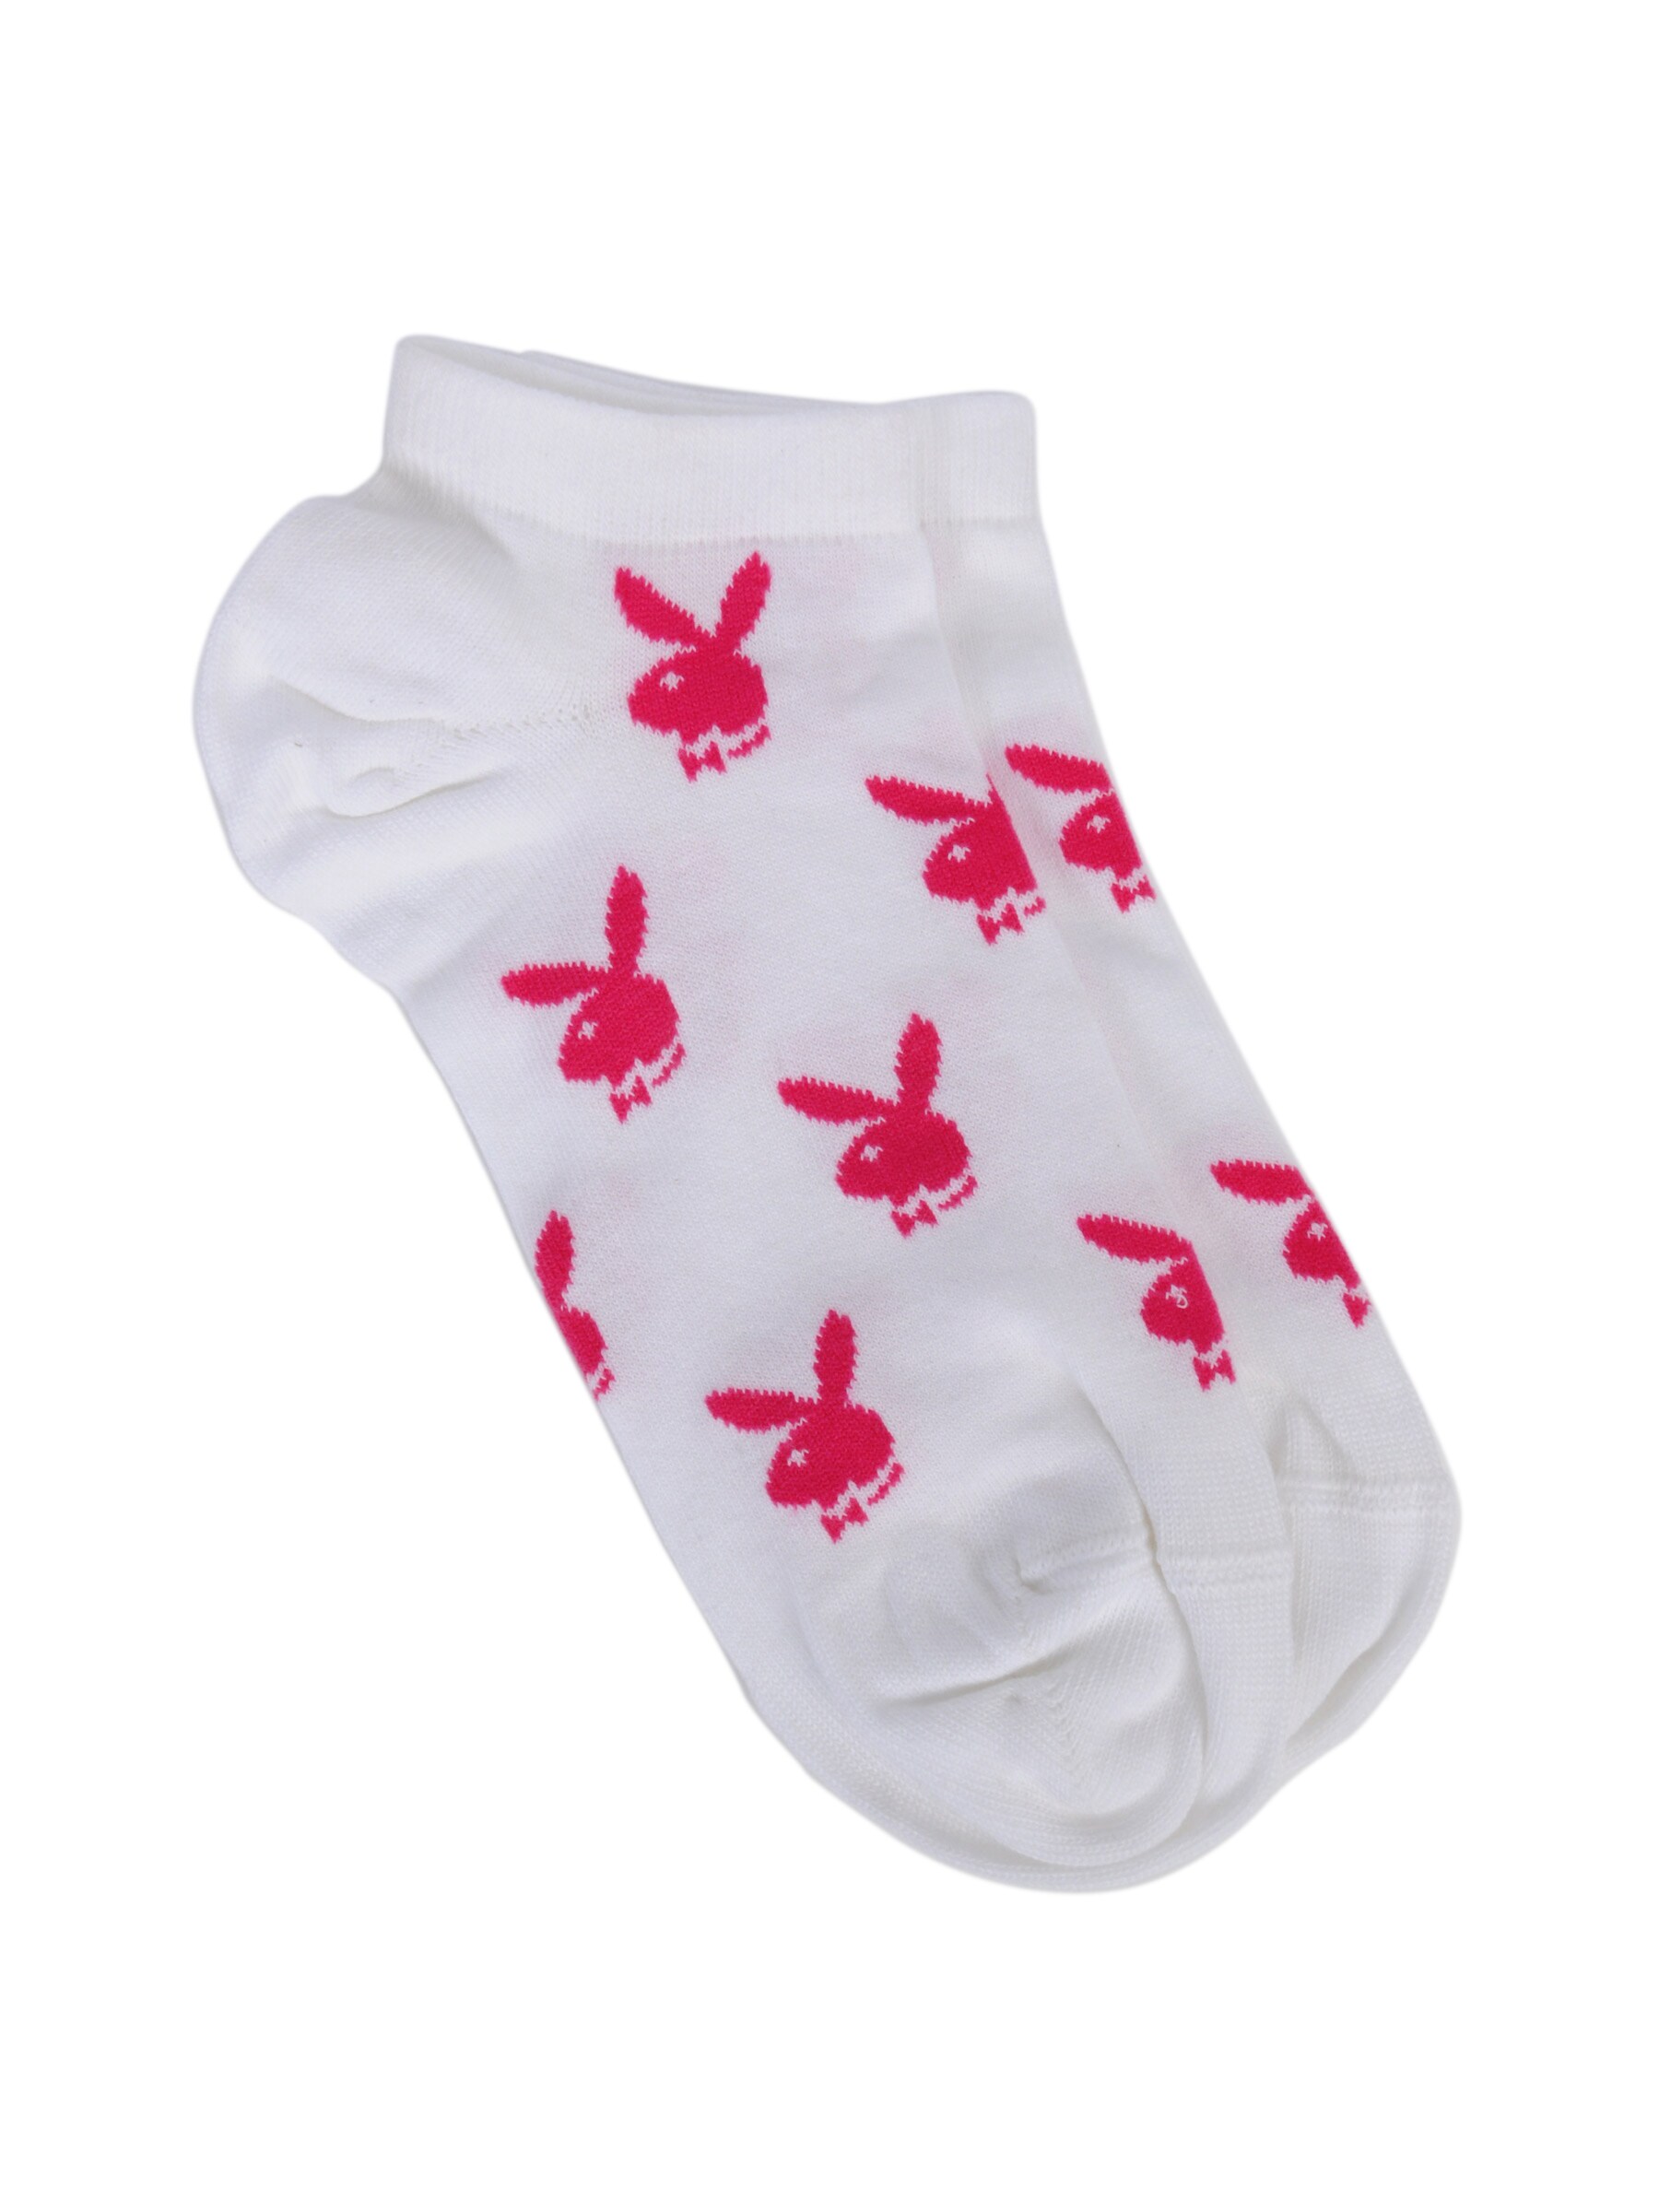 Playboy Women White Socks